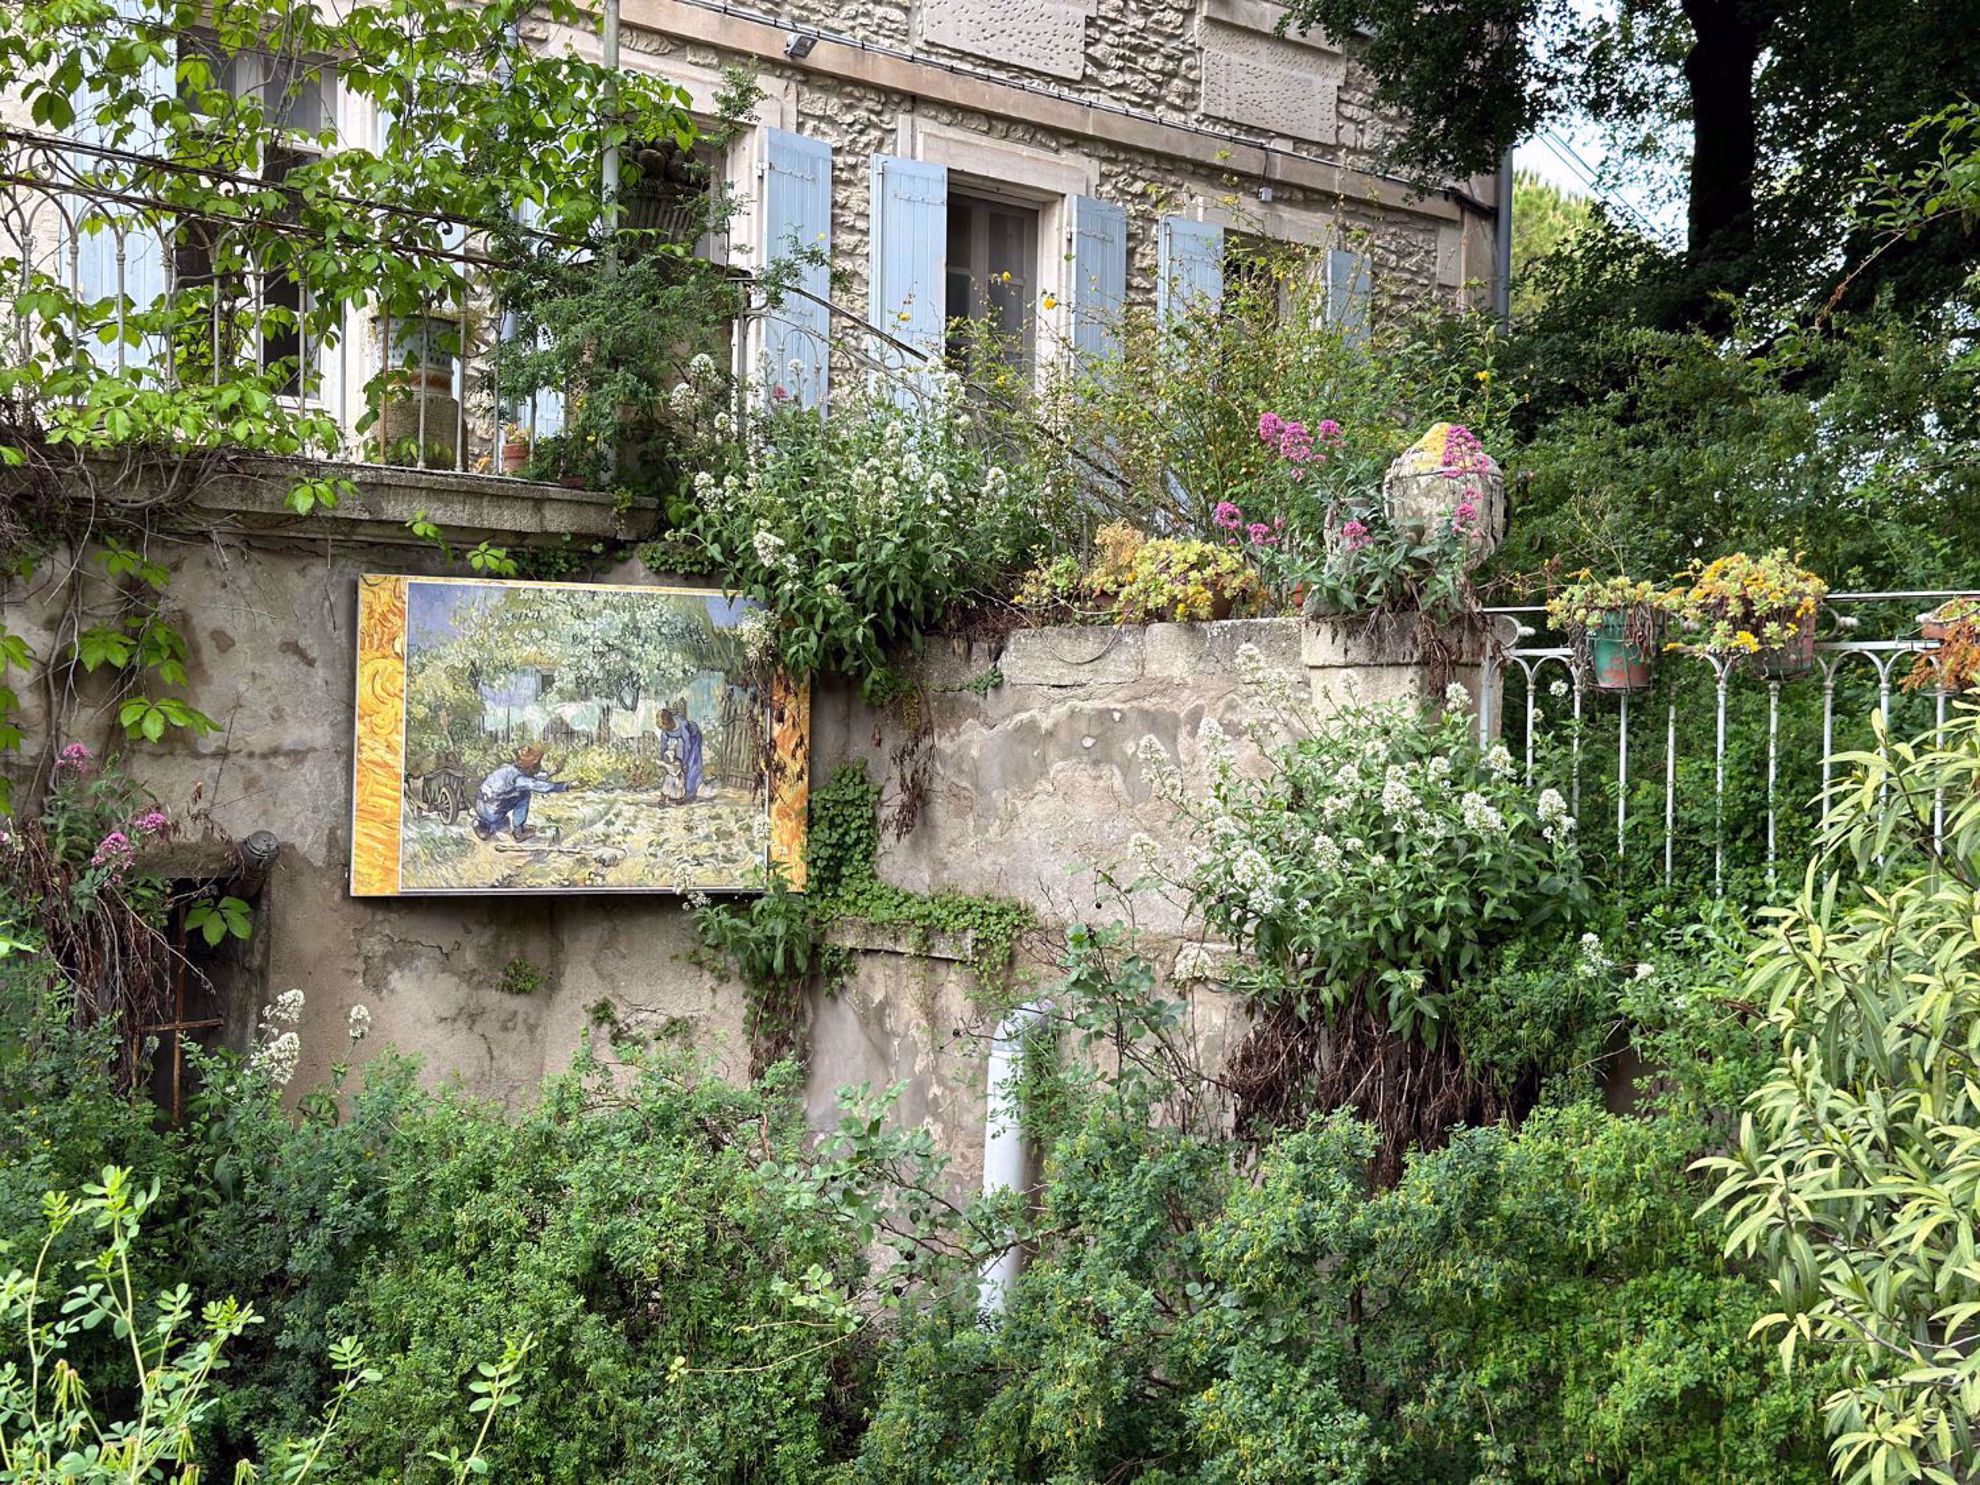 Provence France Culture Garden